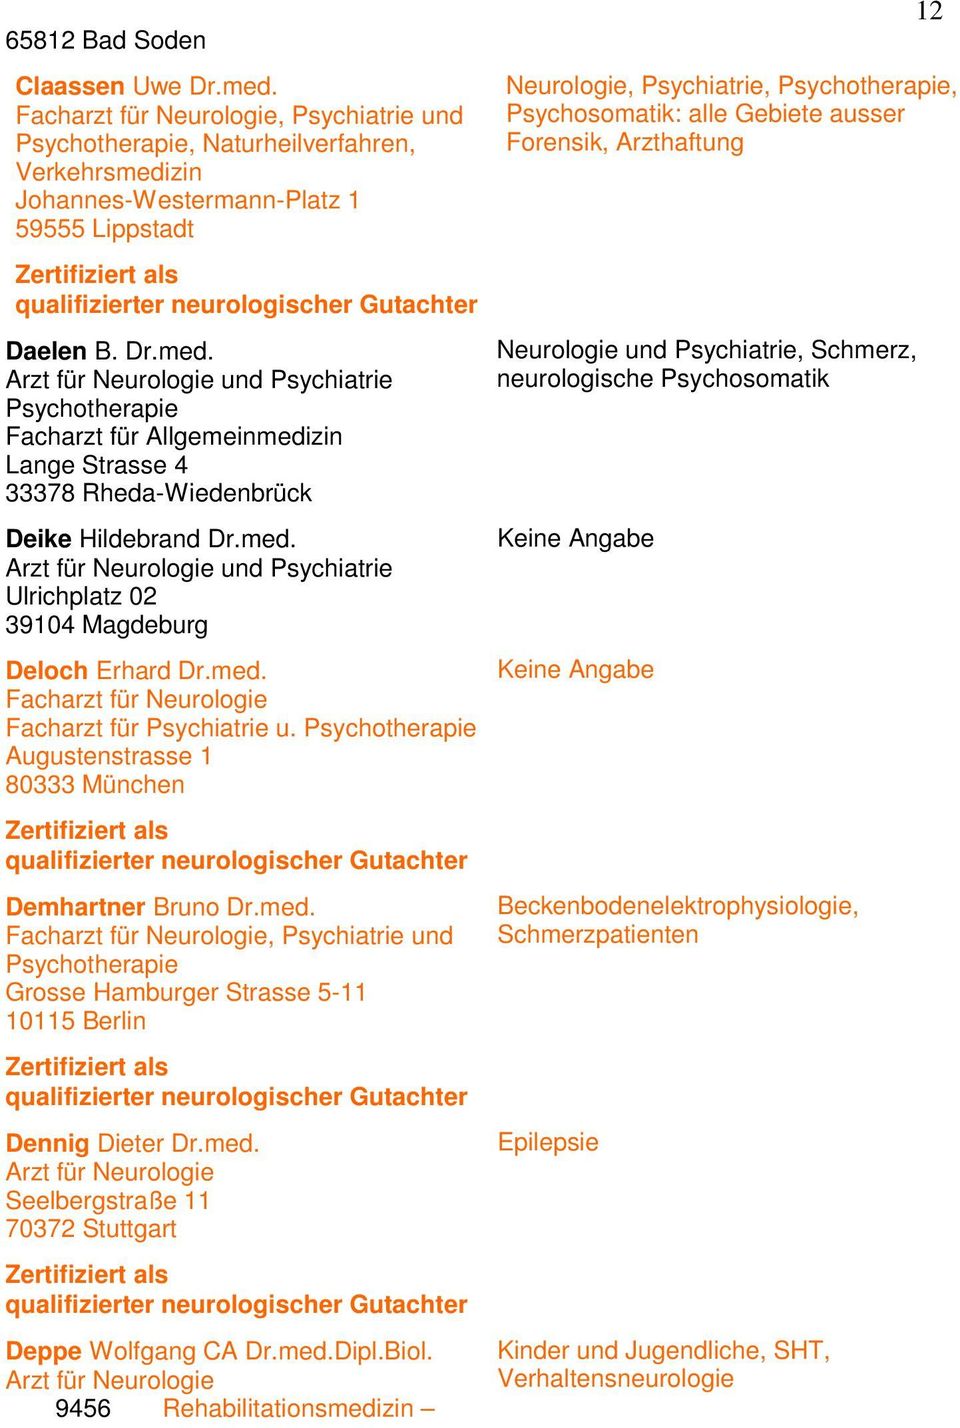 med. Arzt für Neurologie Seelbergstraße 11 70372 Stuttgart Deppe Wolfgang CA Dr.med.Dipl.Biol.